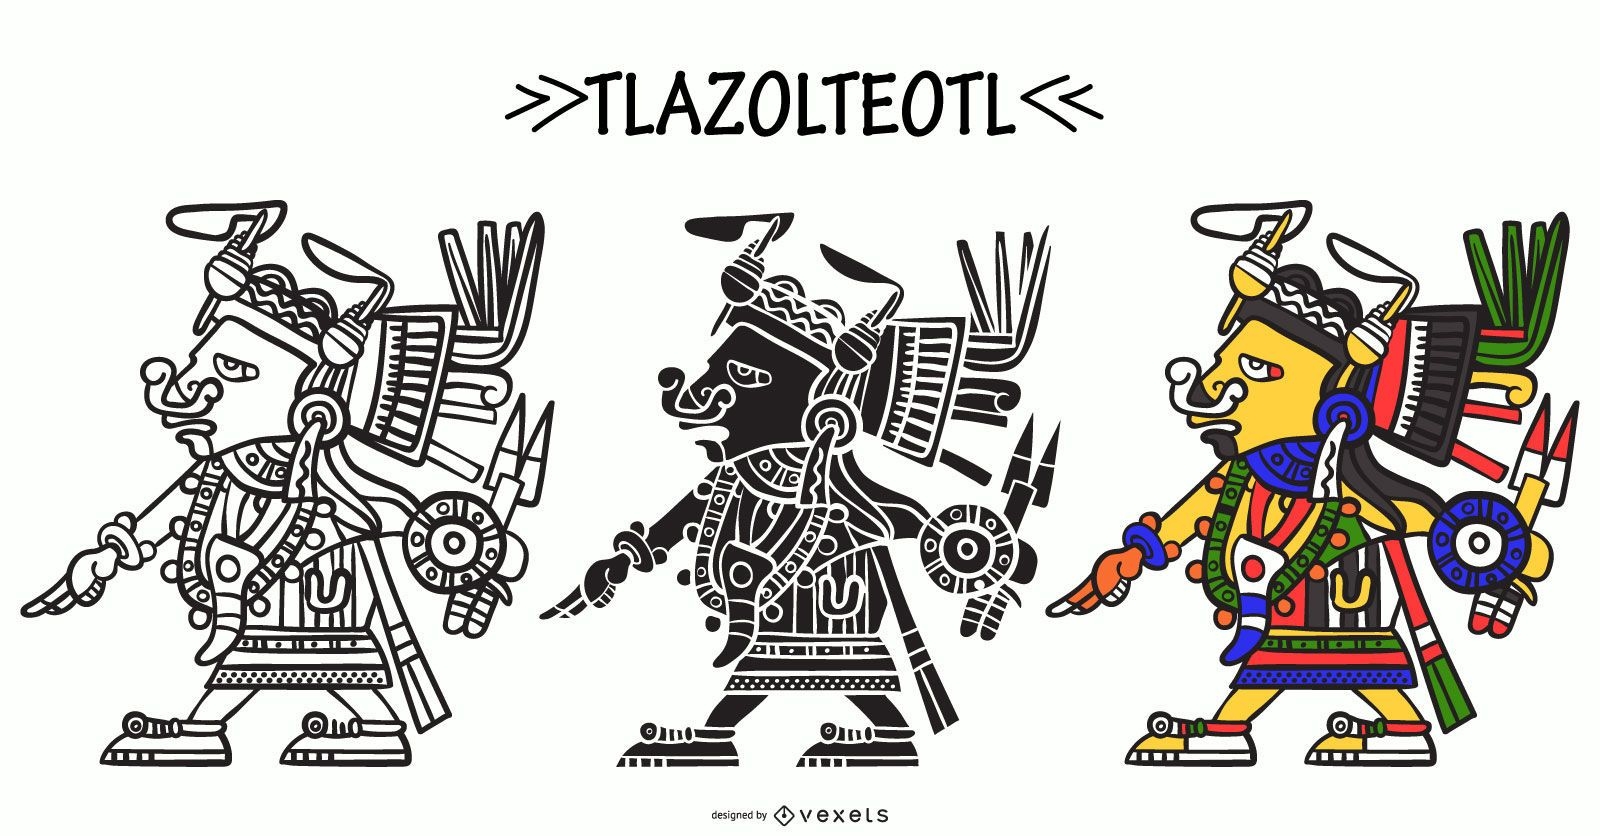 Tlazolteol aztekischer Gottvektorsatz